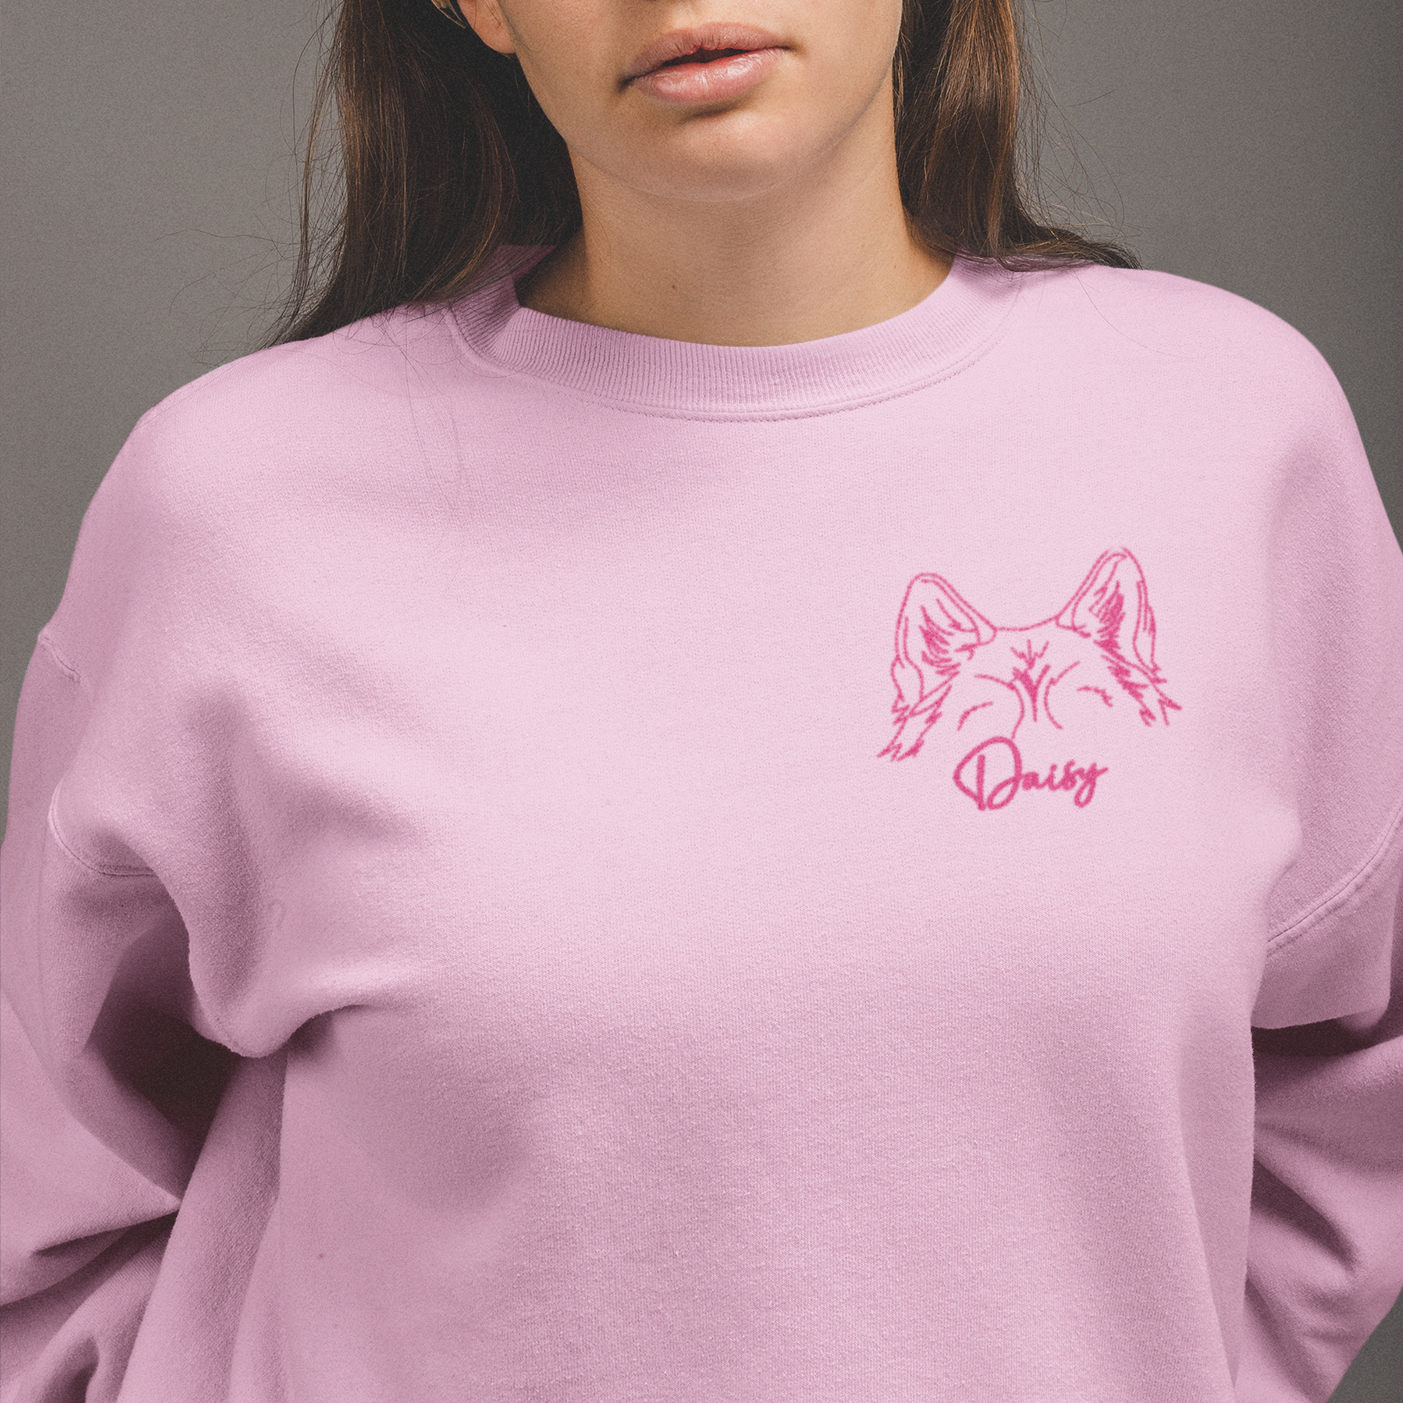 Pink Custom Embroidered Crewneck Sweatshirt - Dog Ears with Name